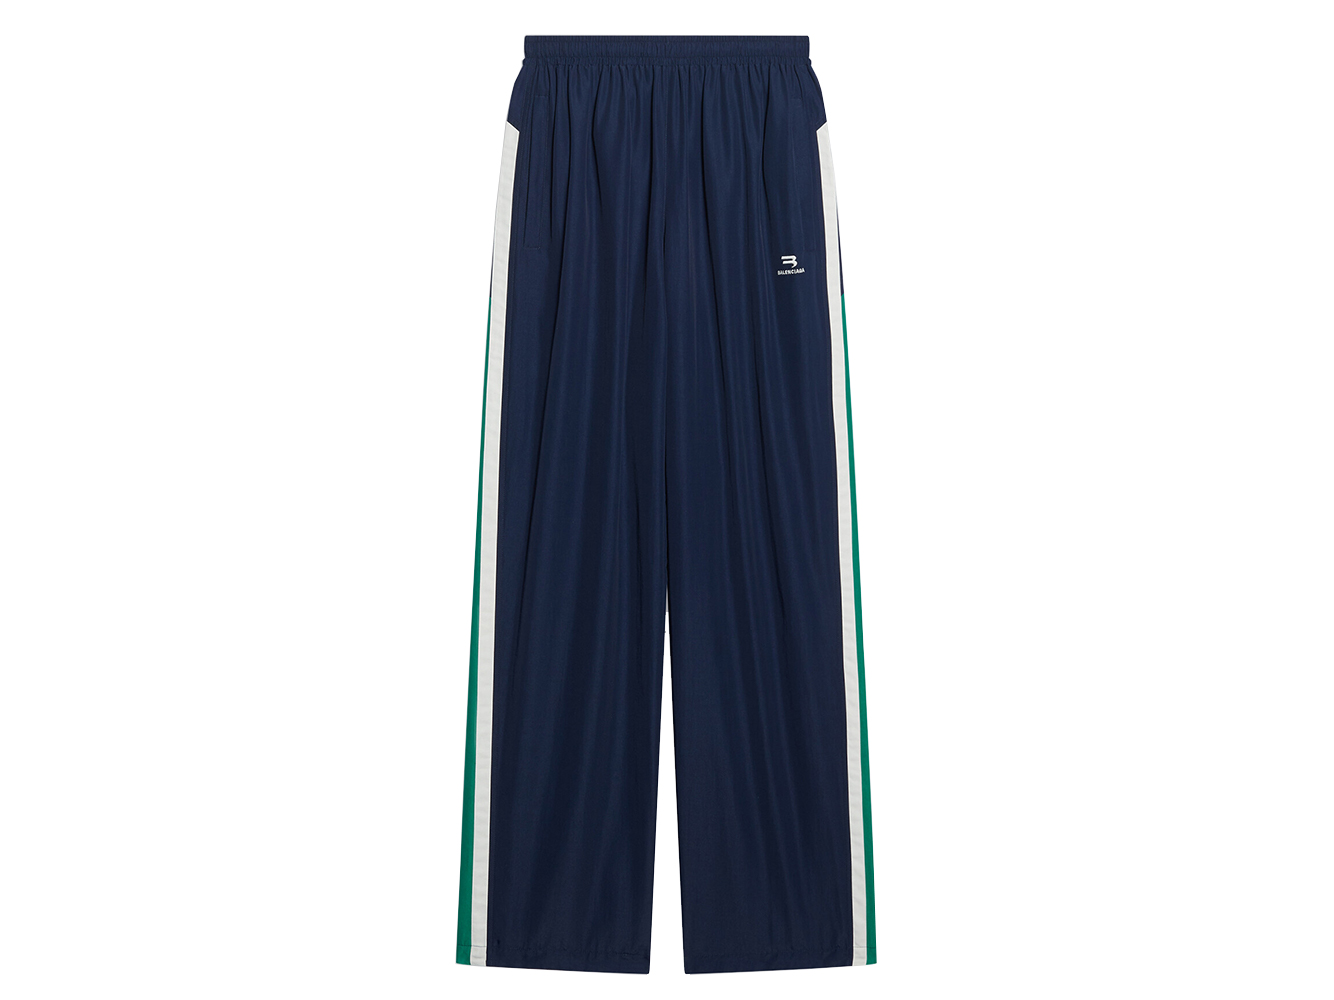 Balenciaga Sporty B Tracksuit Pants Dark Blue/Green/White Men's 